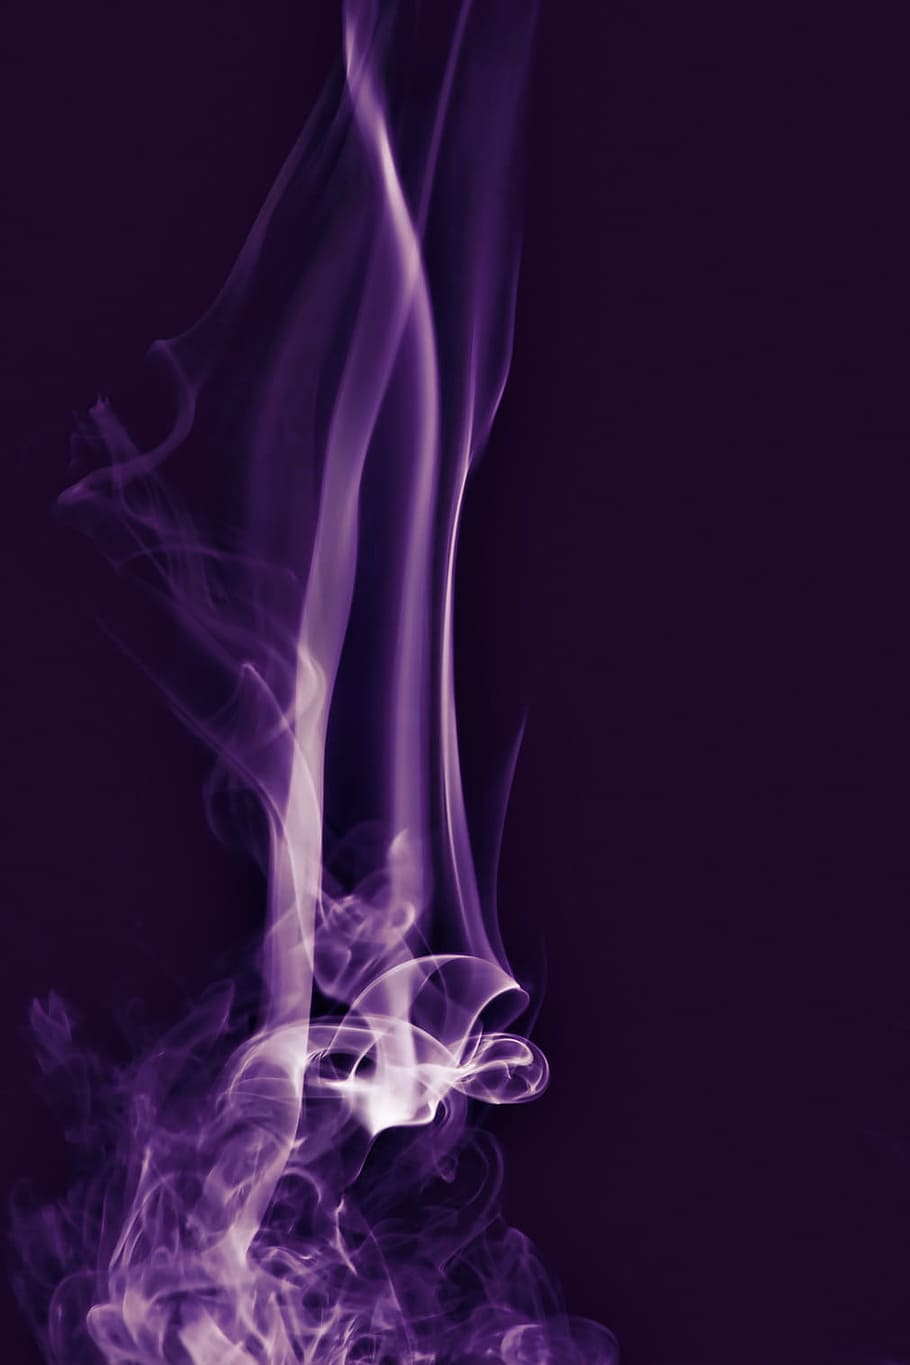 aromaterapi, latar belakang, warna, bau, asap, asap - struktur fisik, gerakan, abstrak, latar belakang hitam, foto studio